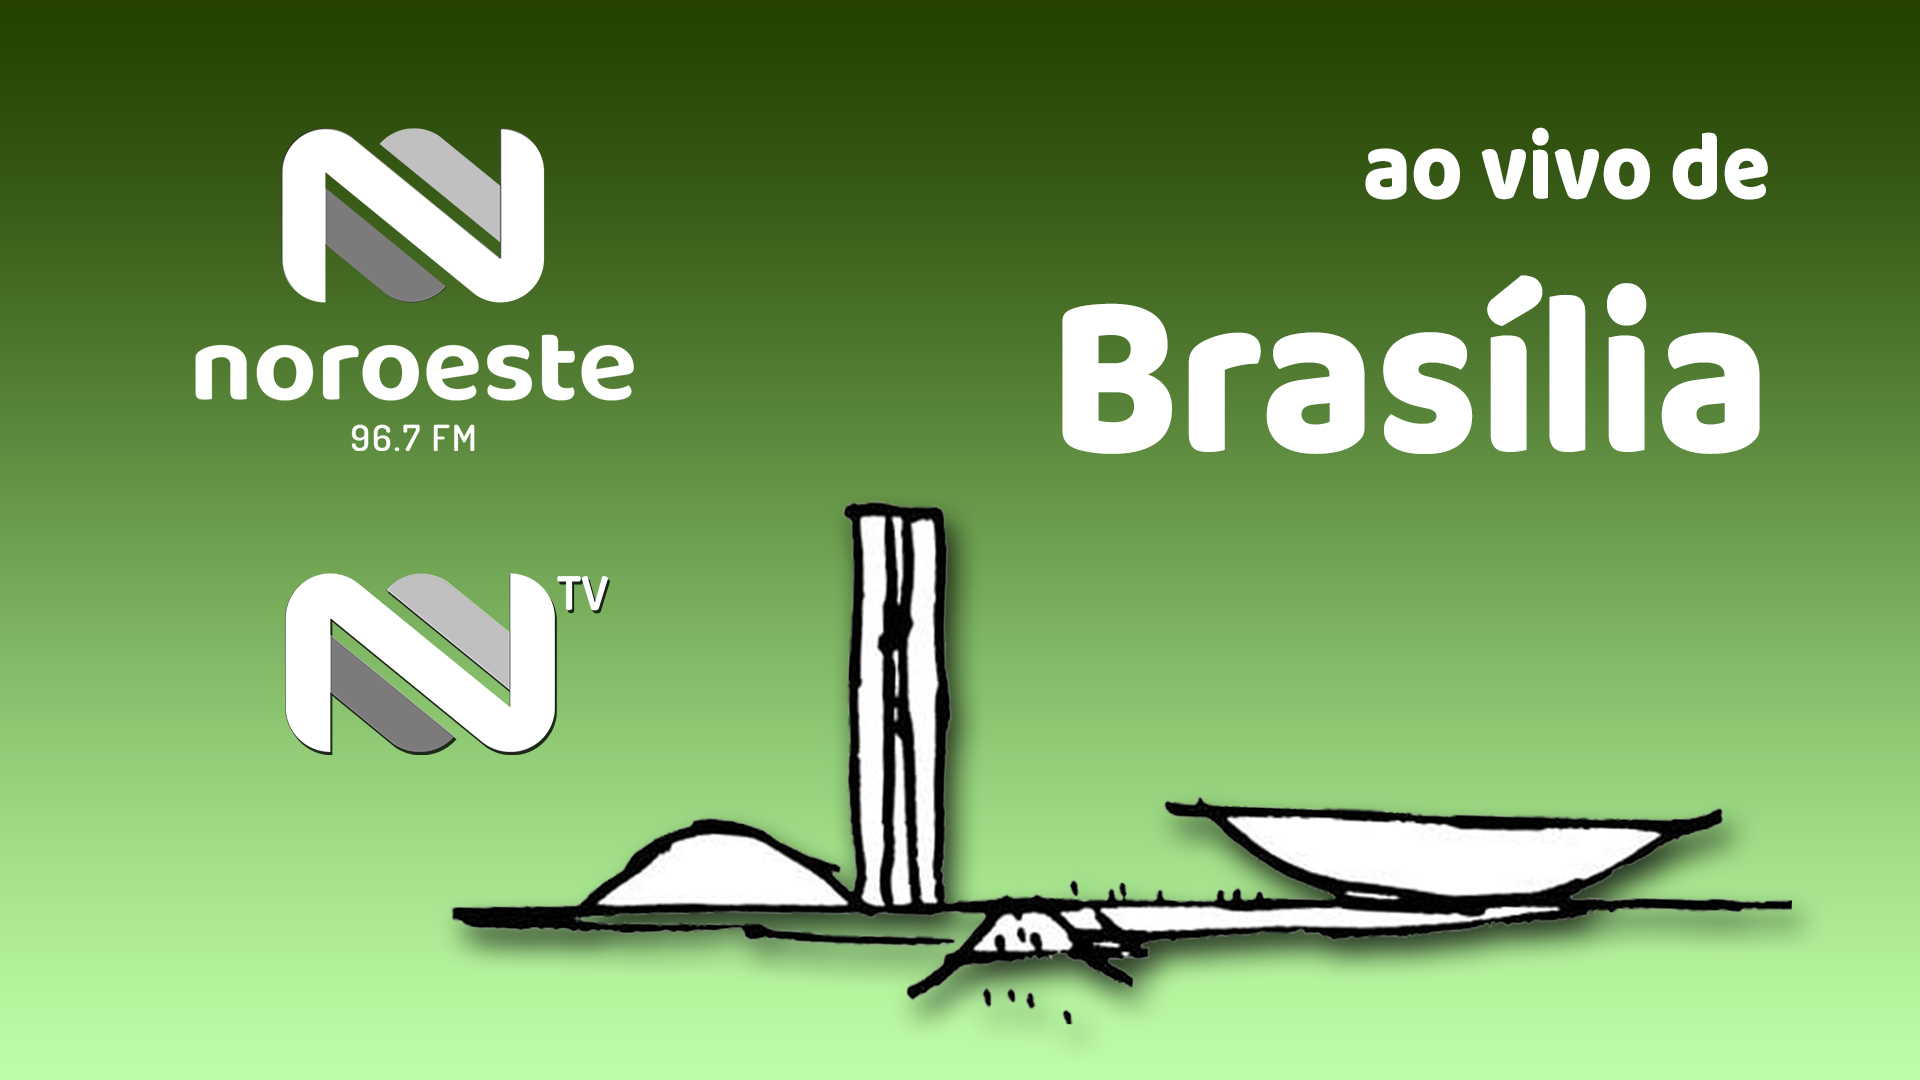 Noroeste Repórter ao vivo de Brasília